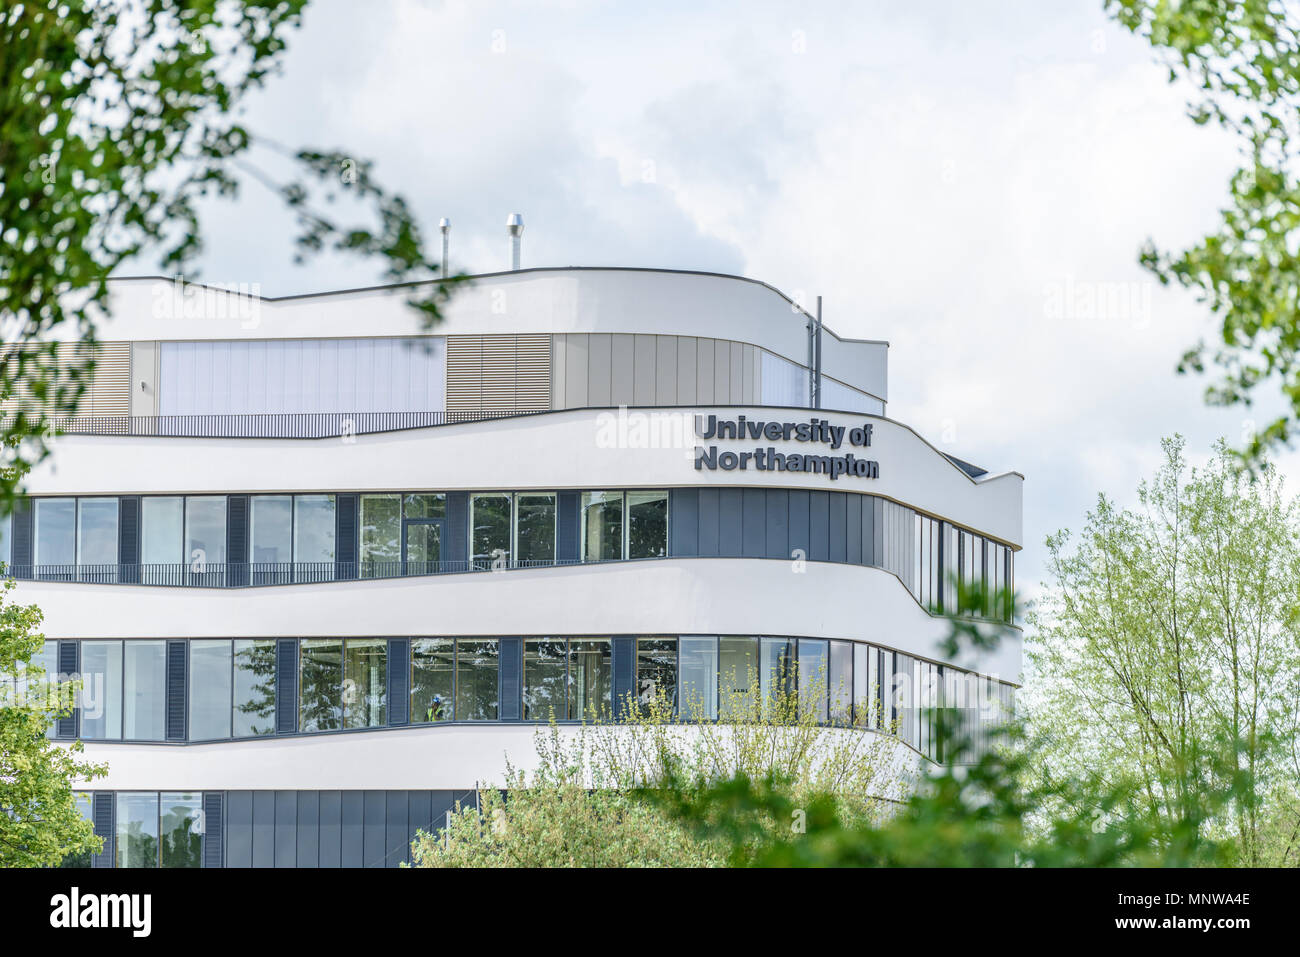 Northampton UK May 9, 2018: University of Northampton logo sign on new building on nene river. Stock Photo